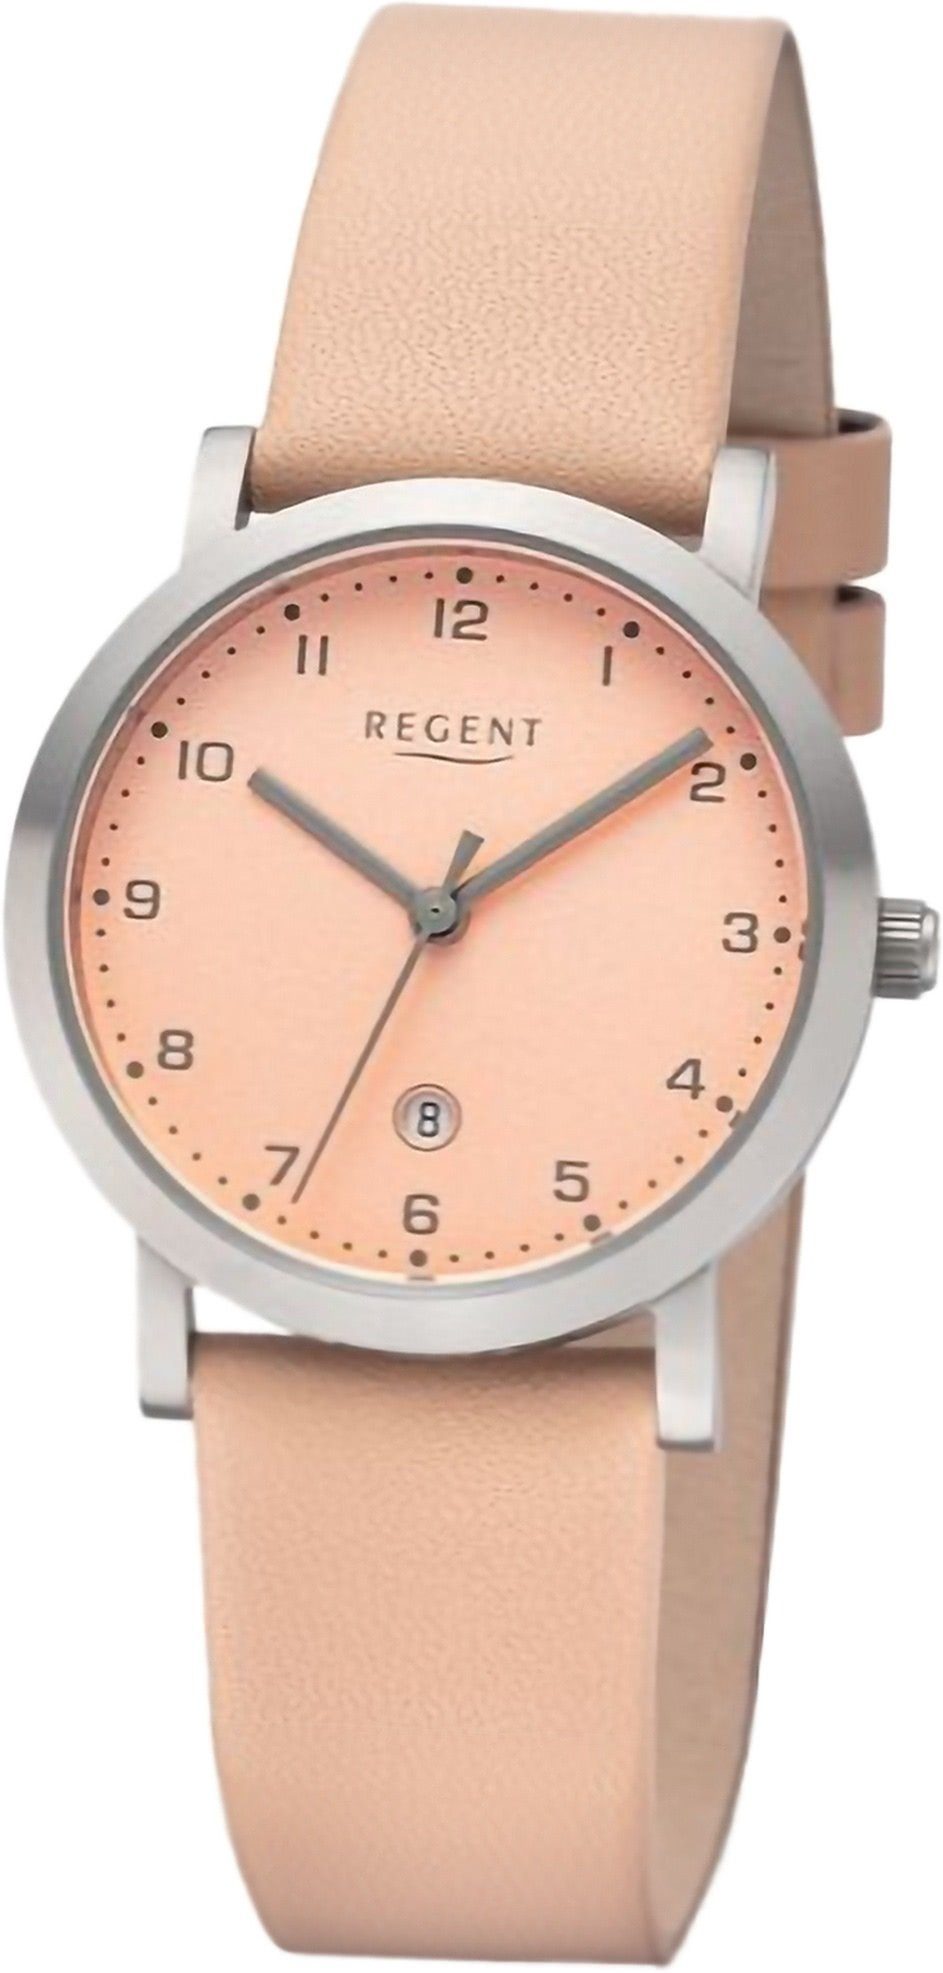 Regent Quarzuhr Regent Damen Armbanduhr Analog, Damenuhr Lederarmband hellrosa, rundes Gehäuse, extra groß (ca. 30mm)